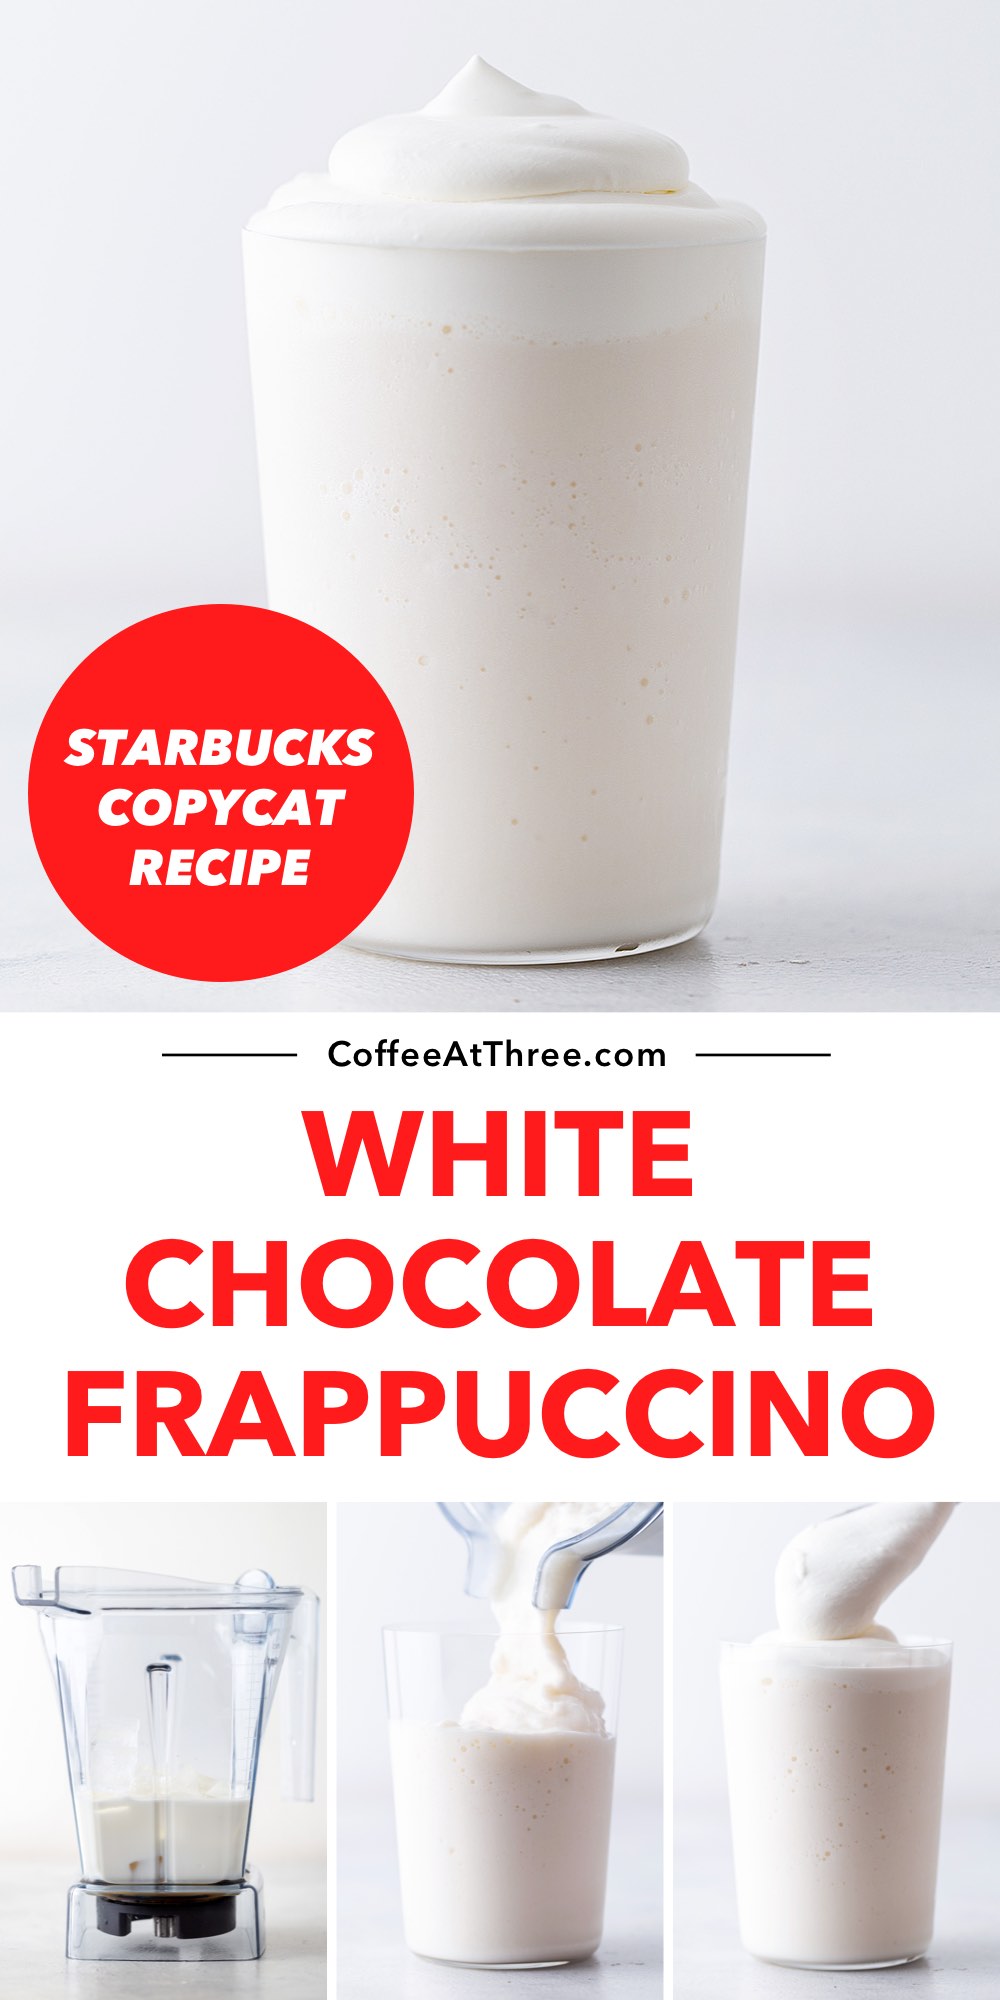 Starbucks Witte Chocolade Frappuccino Copycat